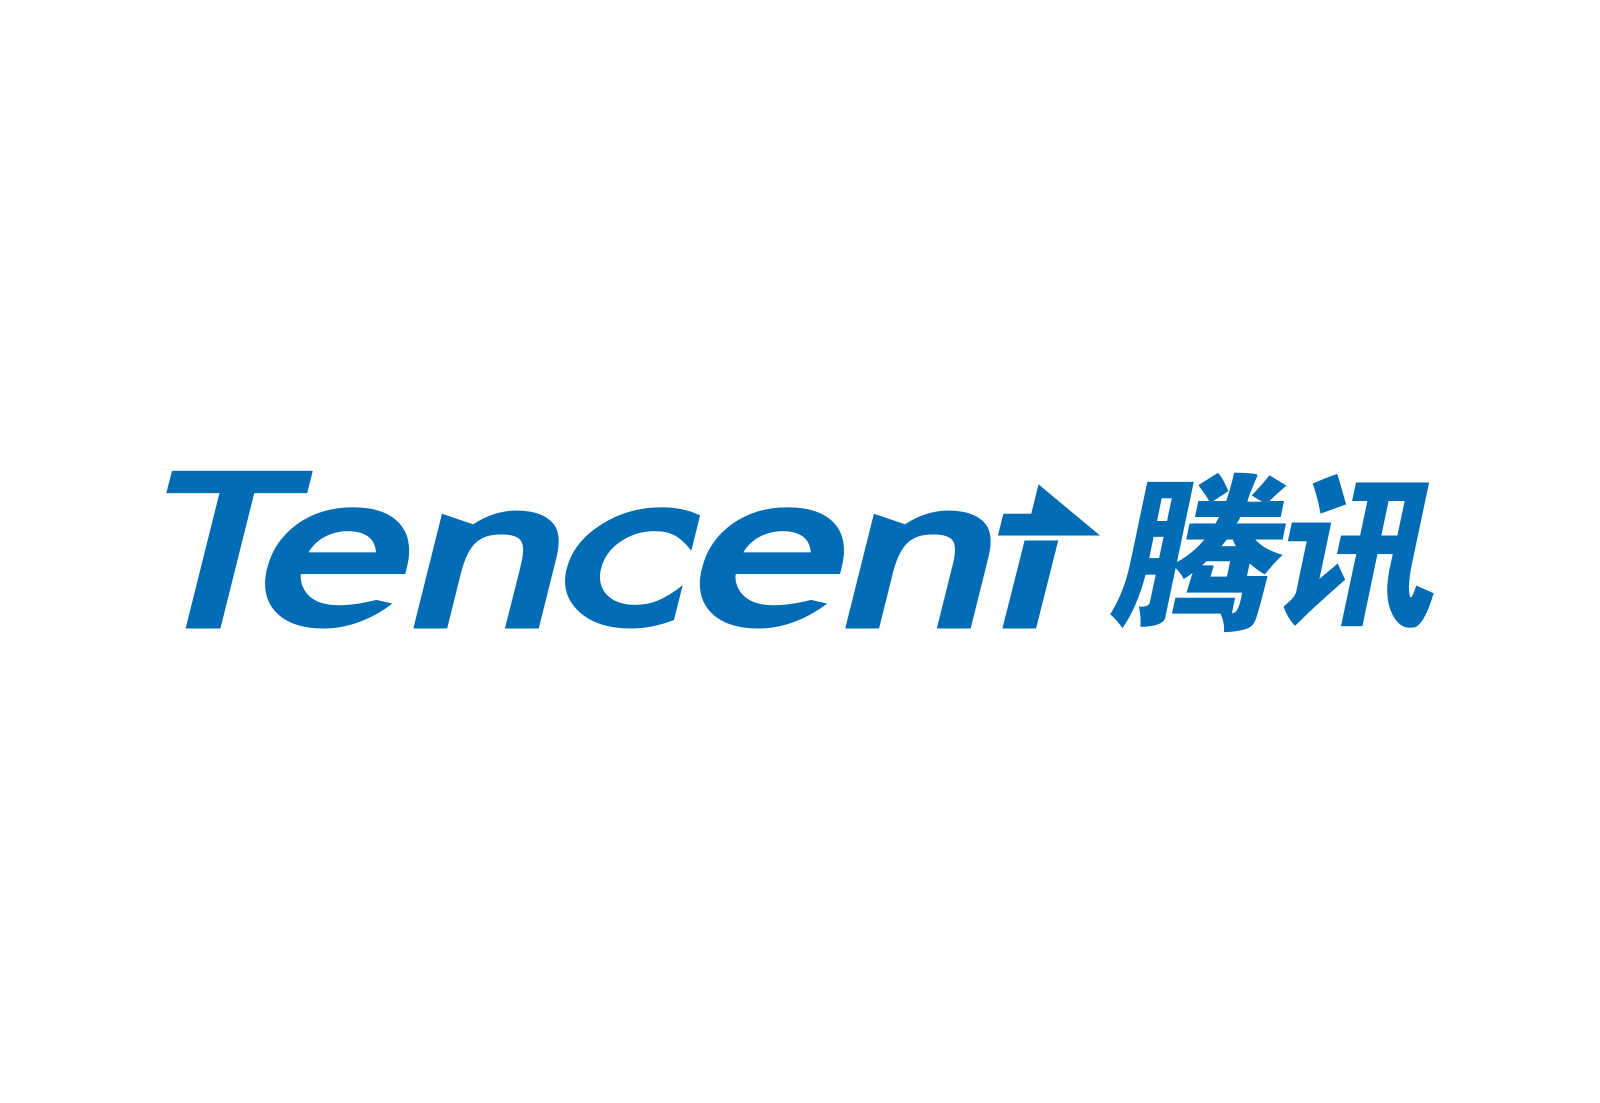 Tencent Logo PNG-PlusPNG.com-